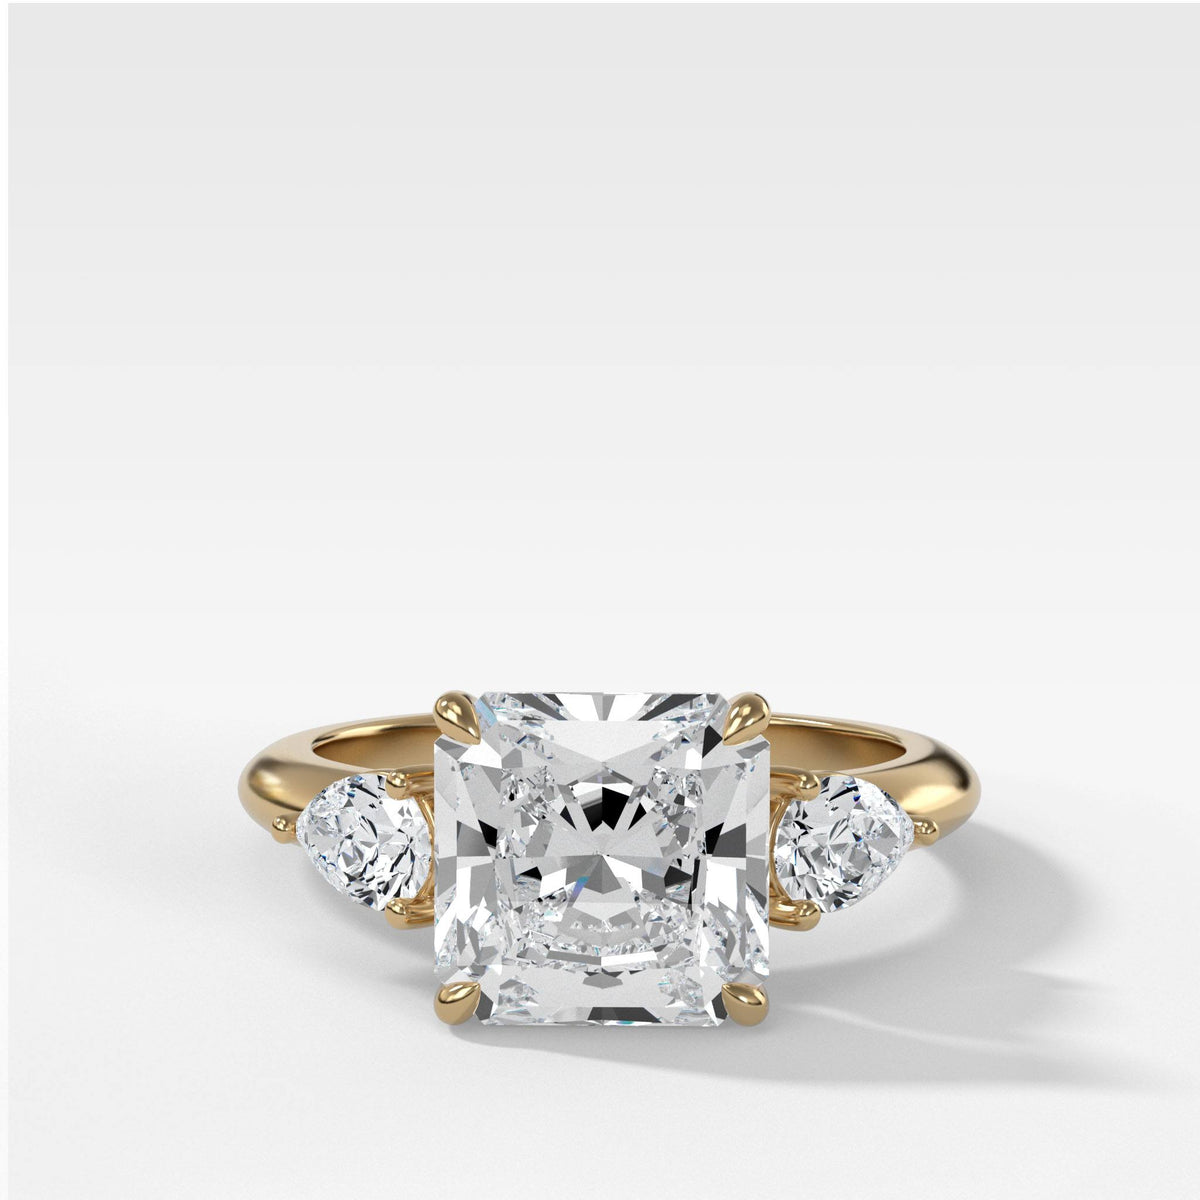 High Quality Square Stone Ring Designs| Alibaba.com